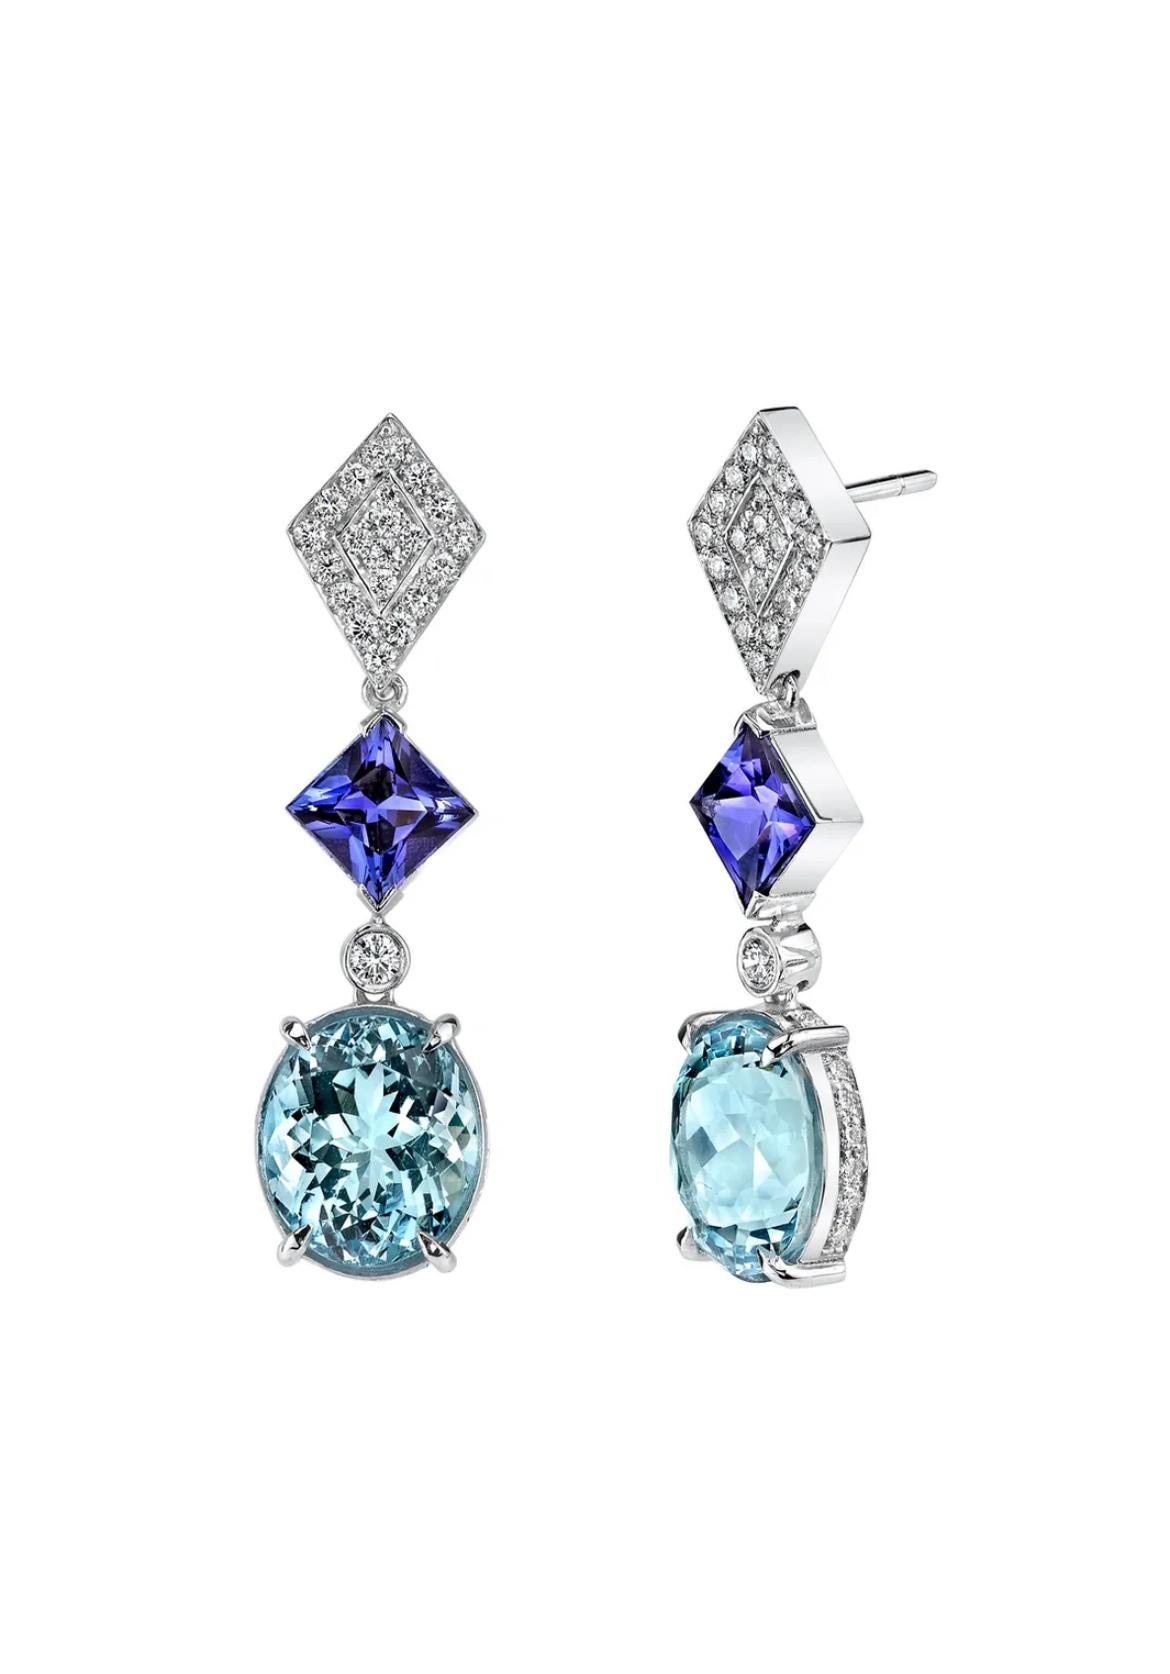 Mixed Cut 6.99ct princess-cut Tanzanite and 2.65ct oval Aquamarine 18K earrings.  For Sale